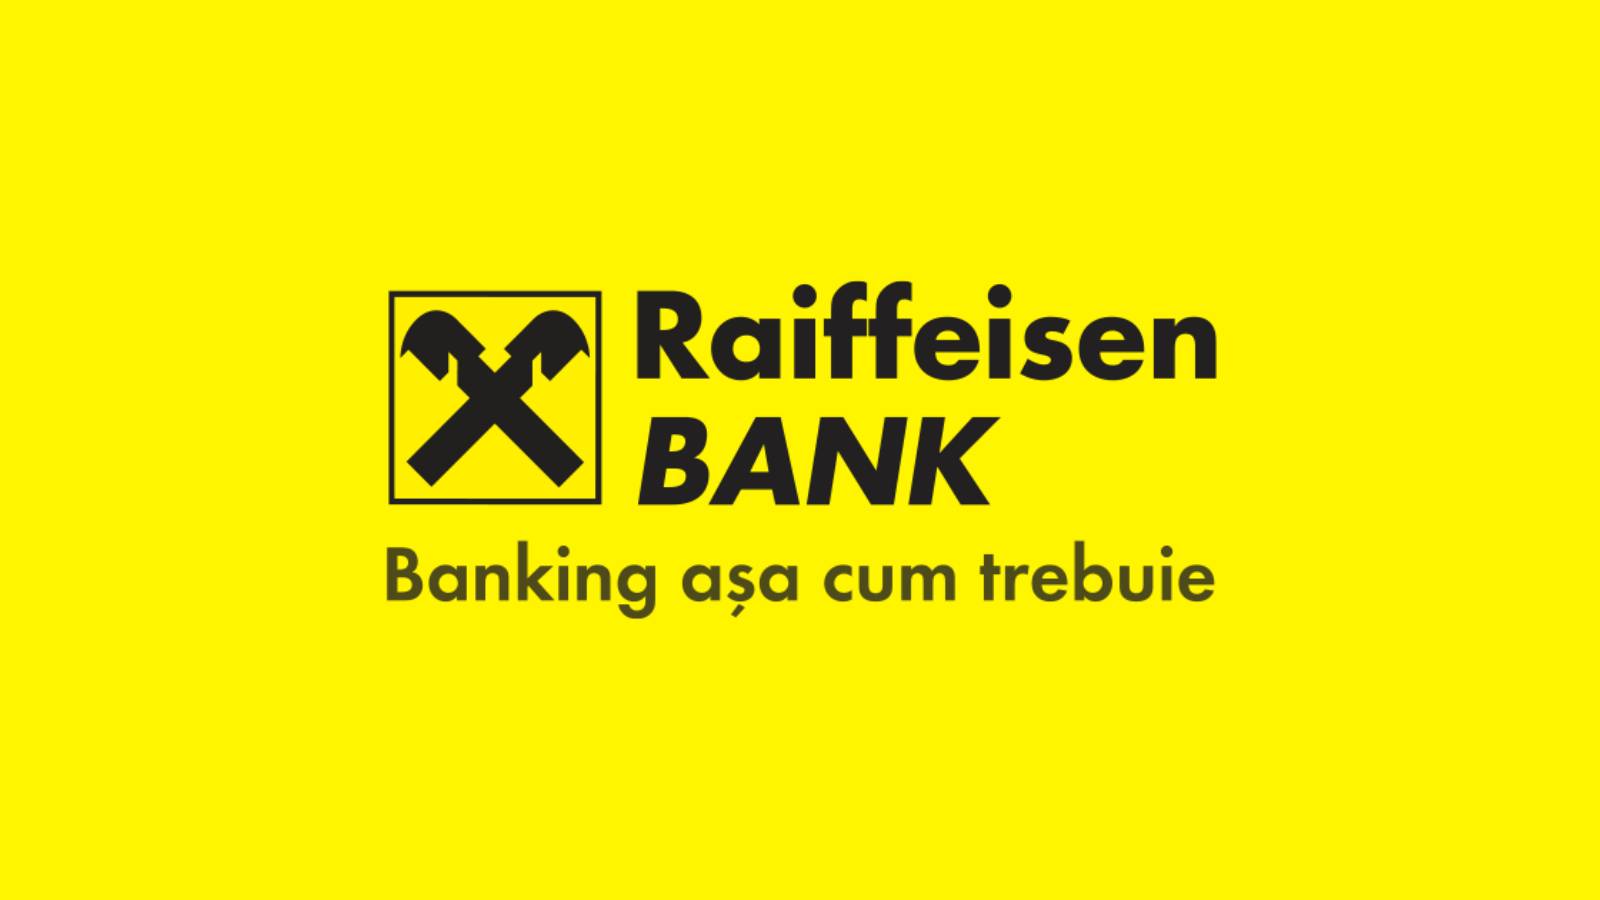 Amigos del banco Raiffeisen